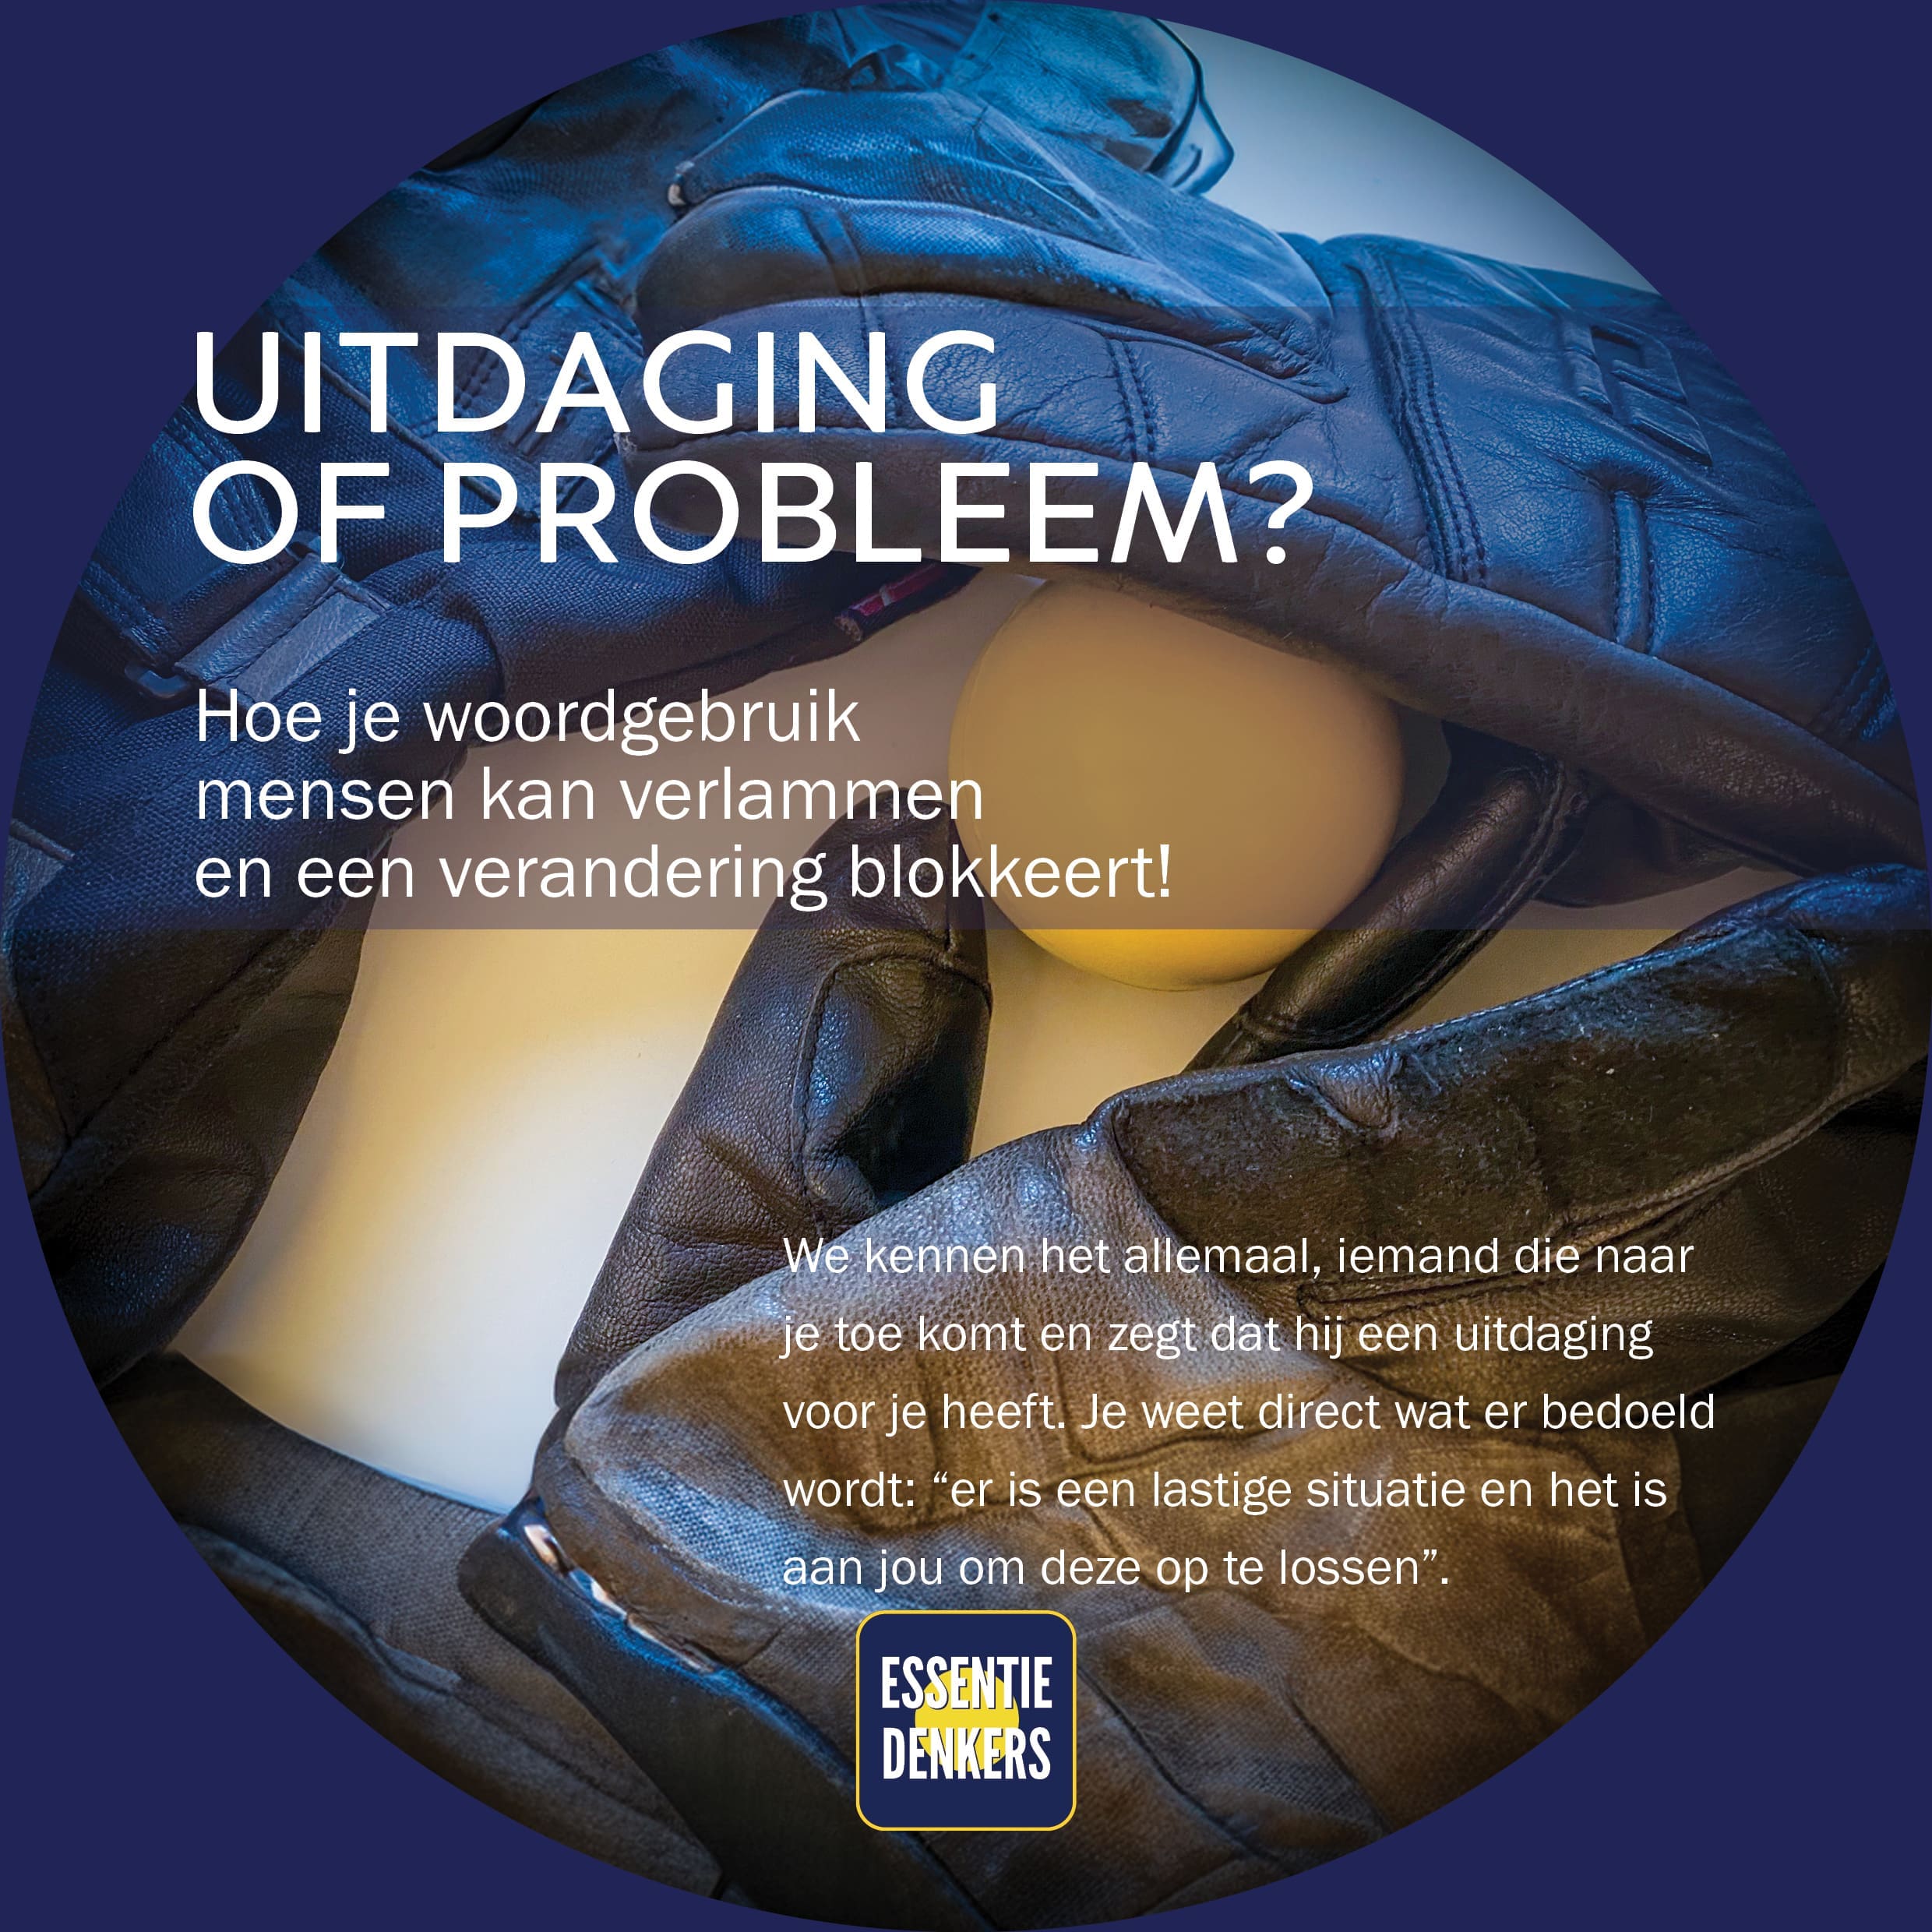 Featured image for “Uitdaging of probleem?”